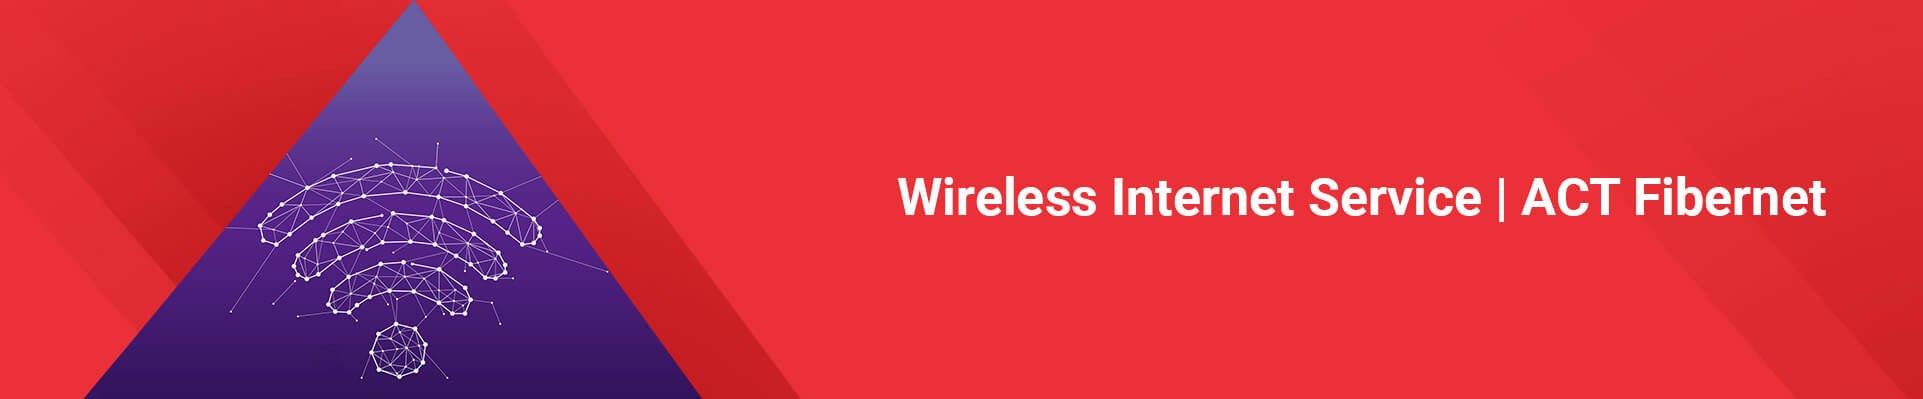 Wireless Internet Service